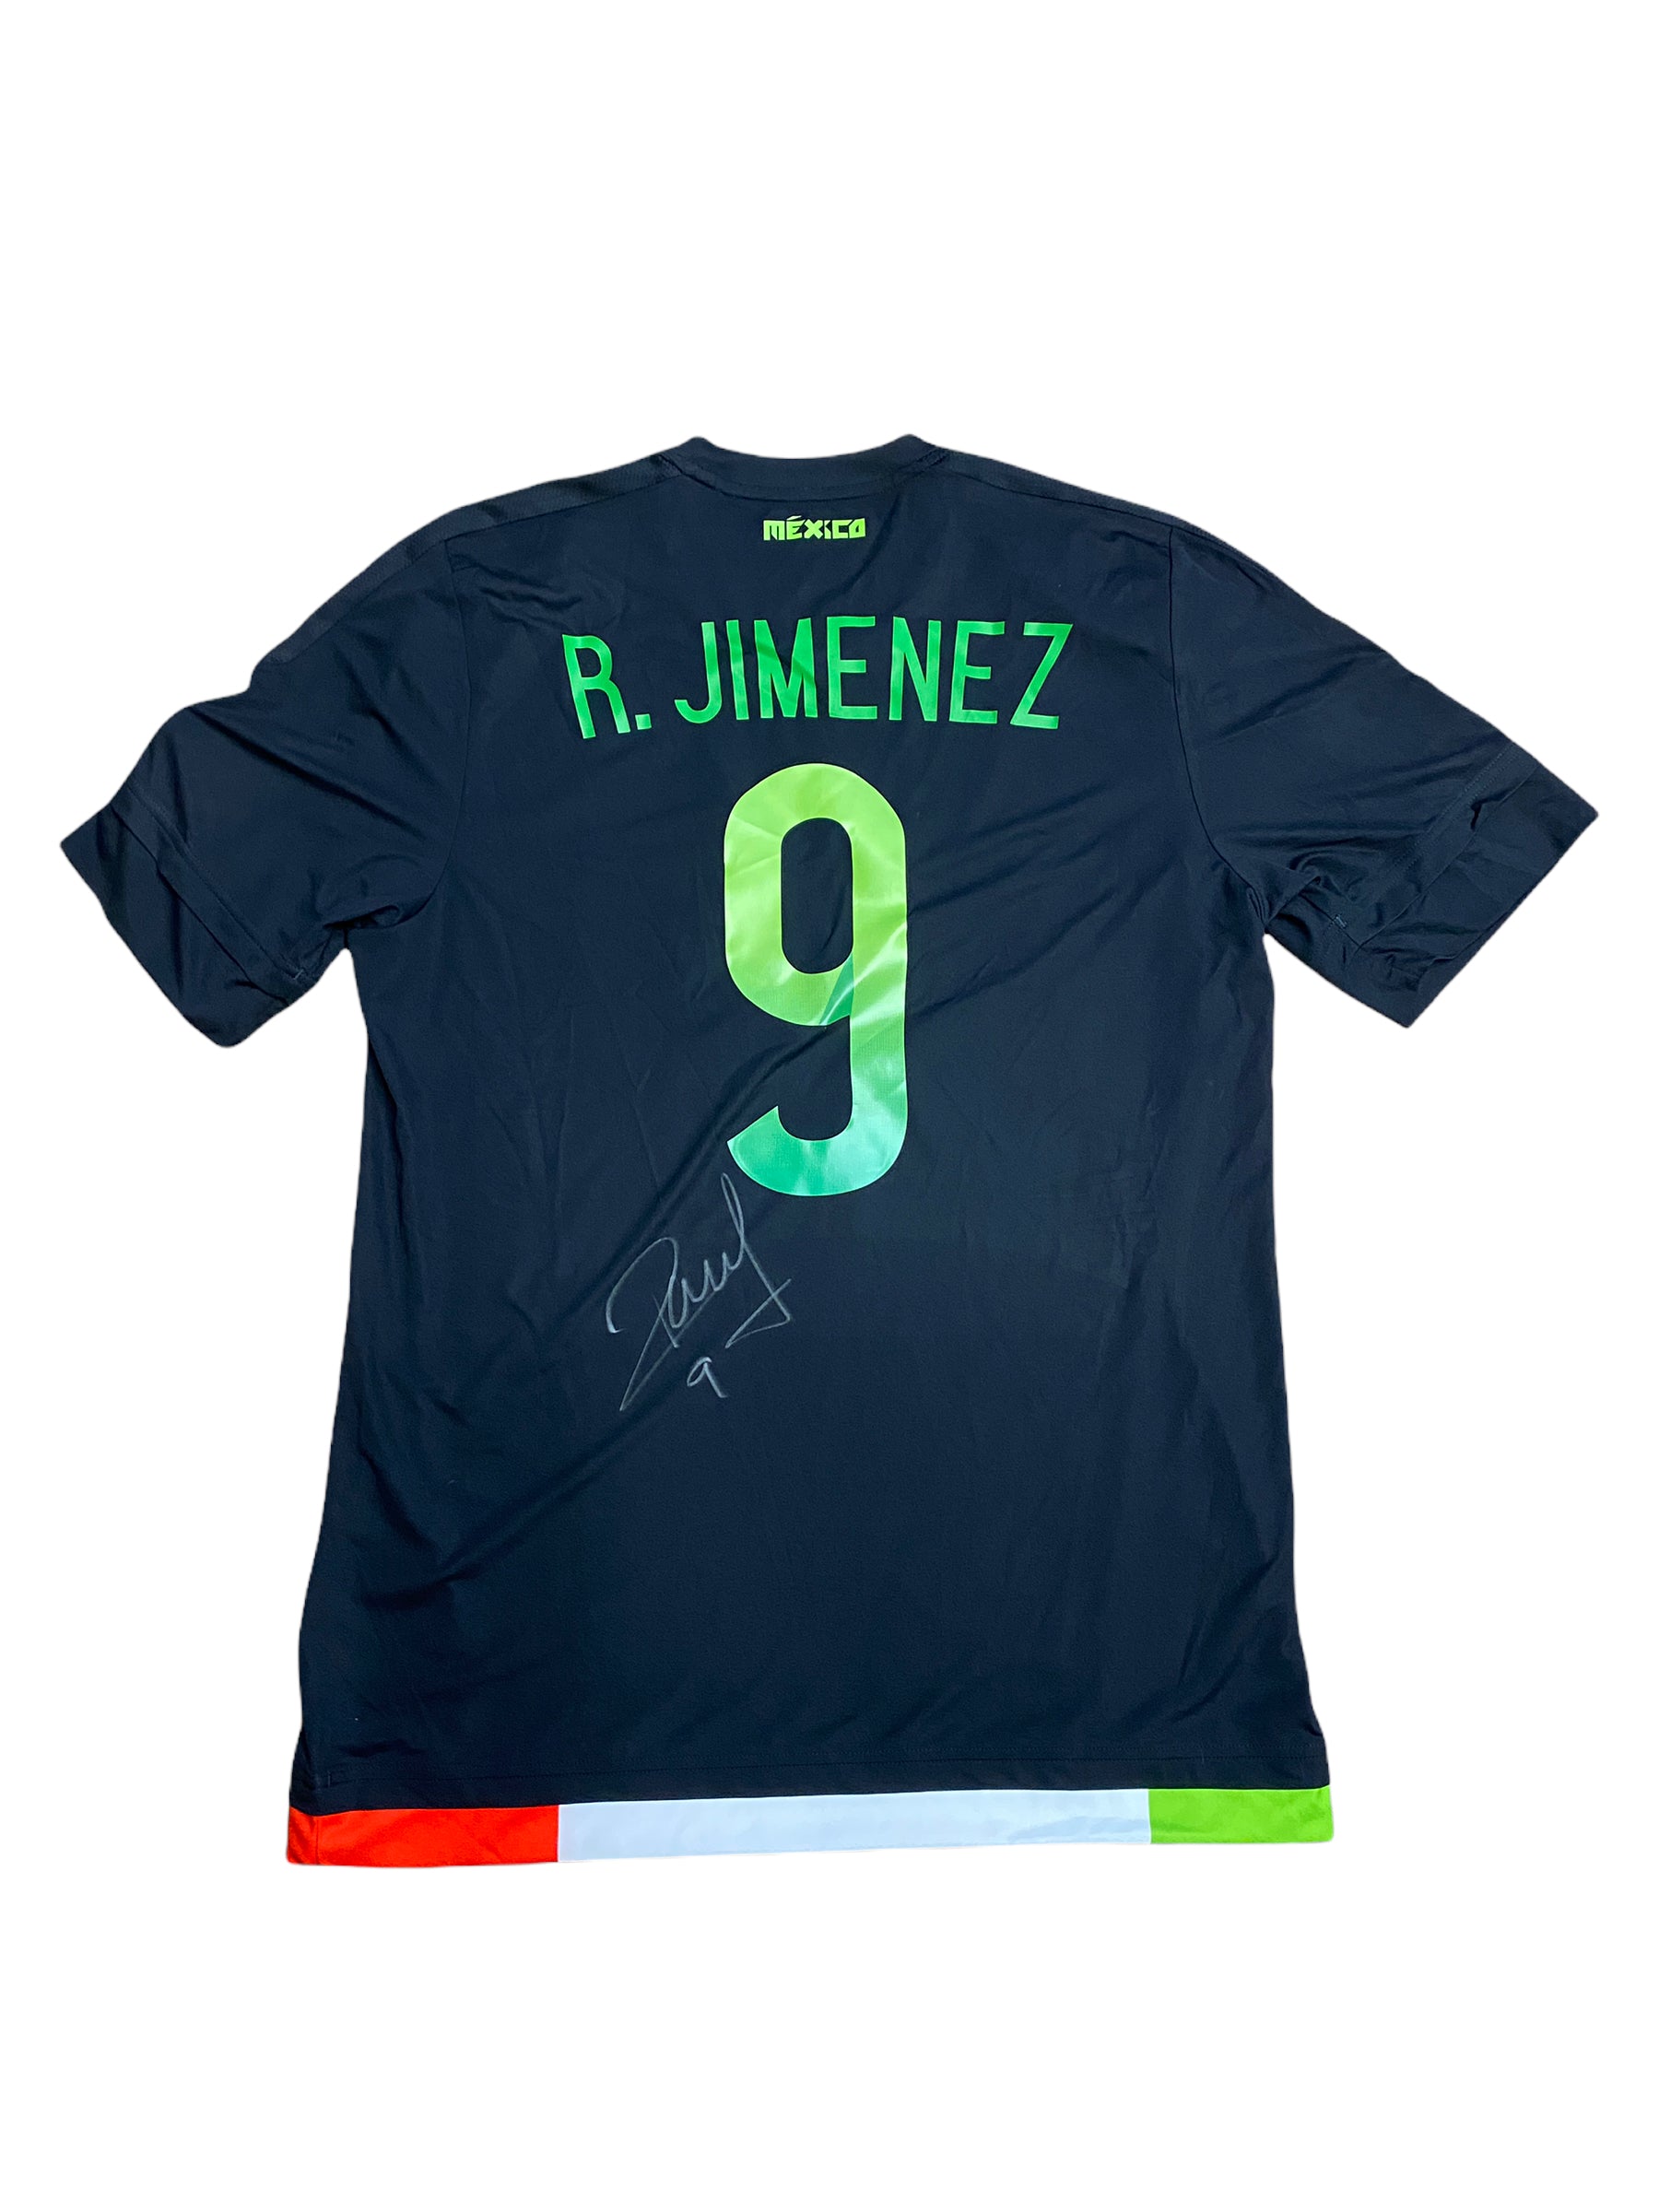 Mexico Raul Jimenez Autographed Signed Jersey COA BNWT *read description*